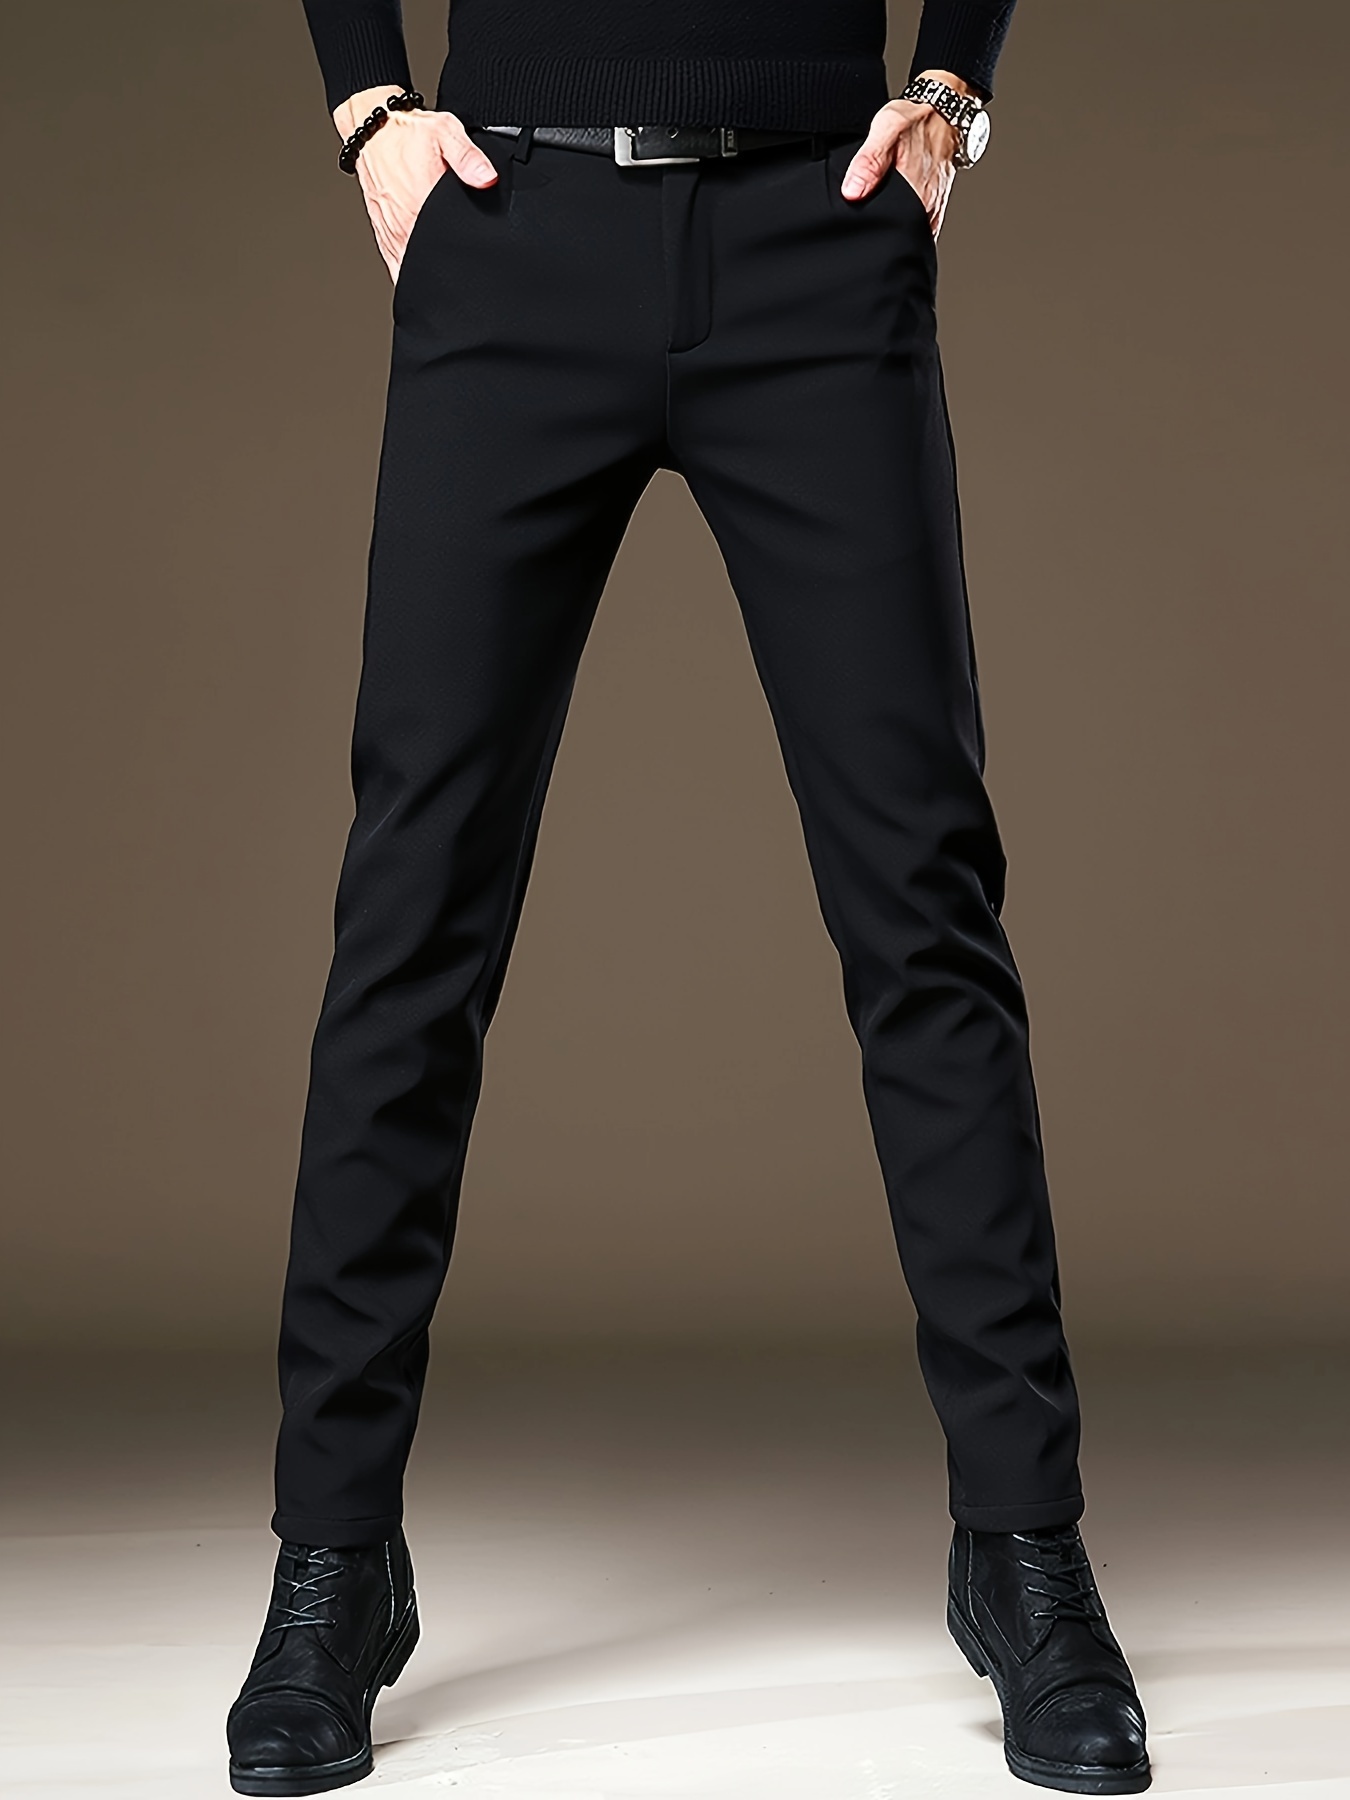 Men and women's dress pants and tuxedo trousers | Formal Fashions-hkpdtq2012.edu.vn